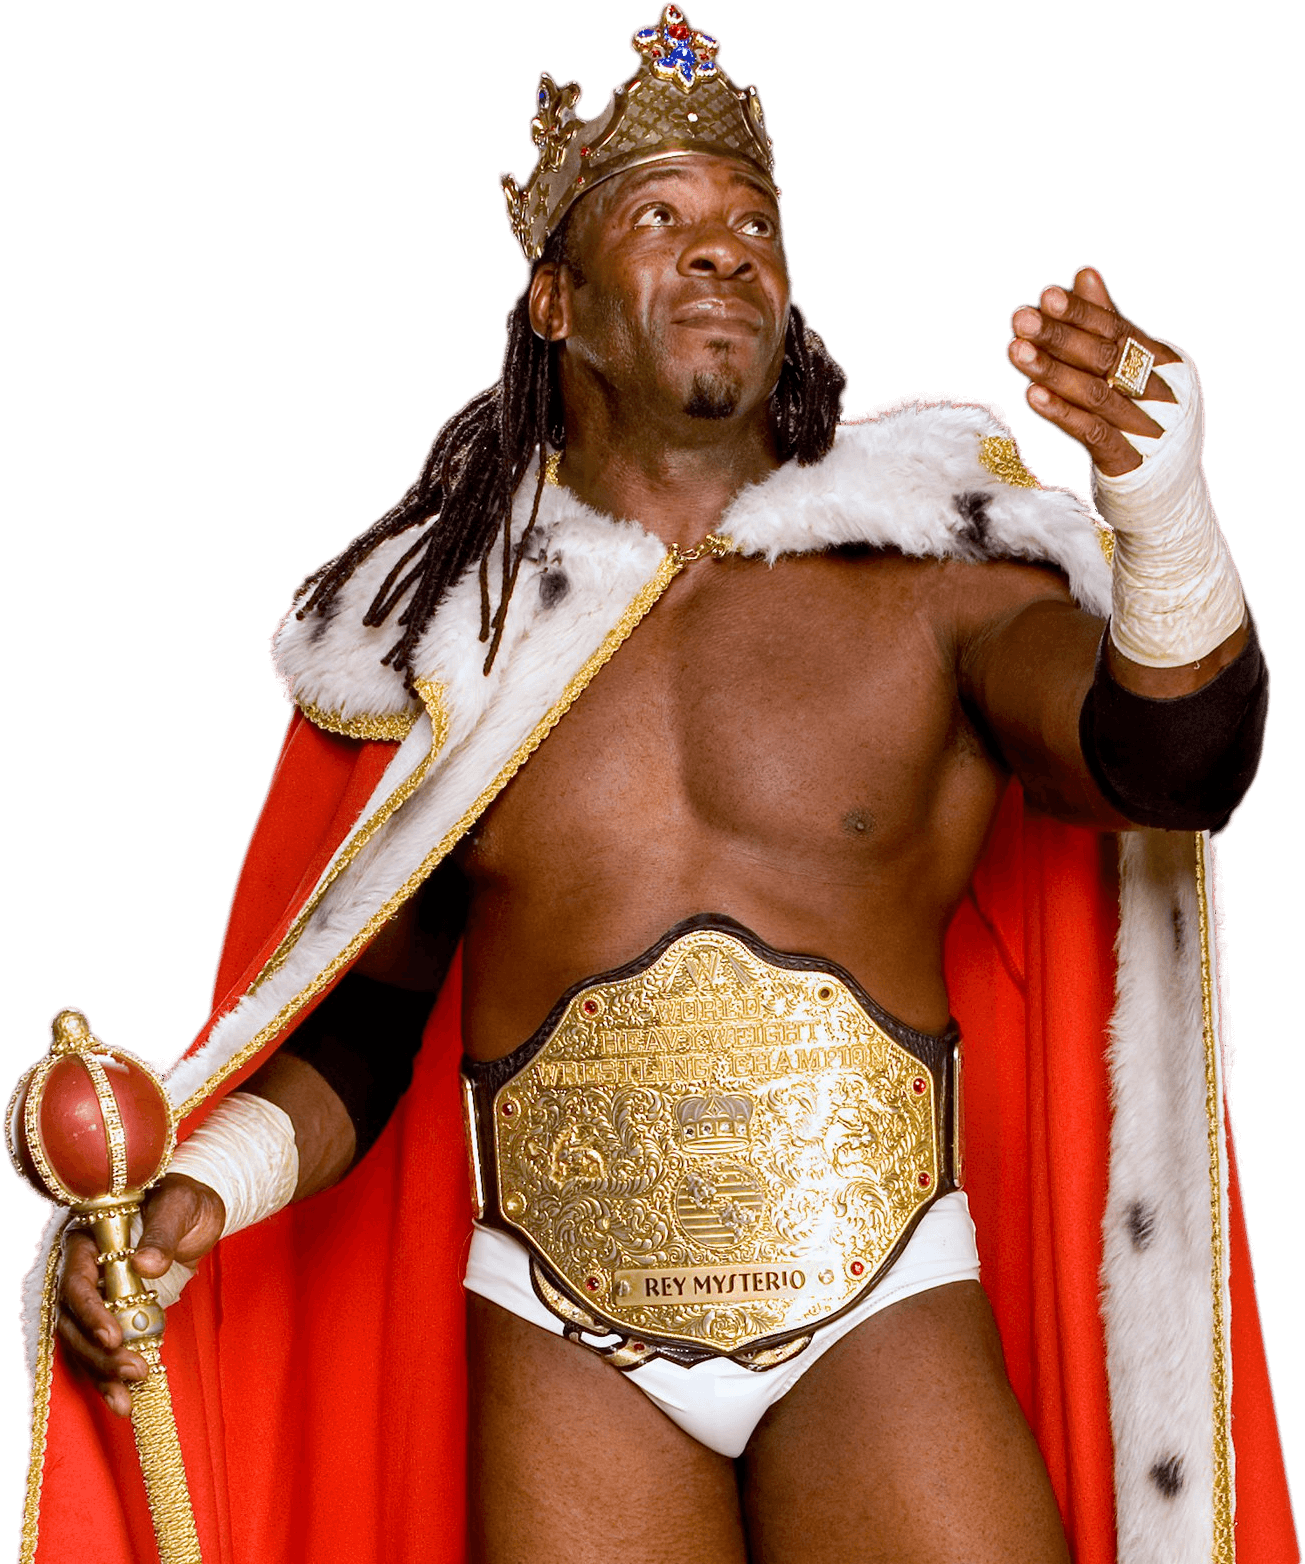 Pop! WWE - King Booker - #128 - Hobby Champion Inc